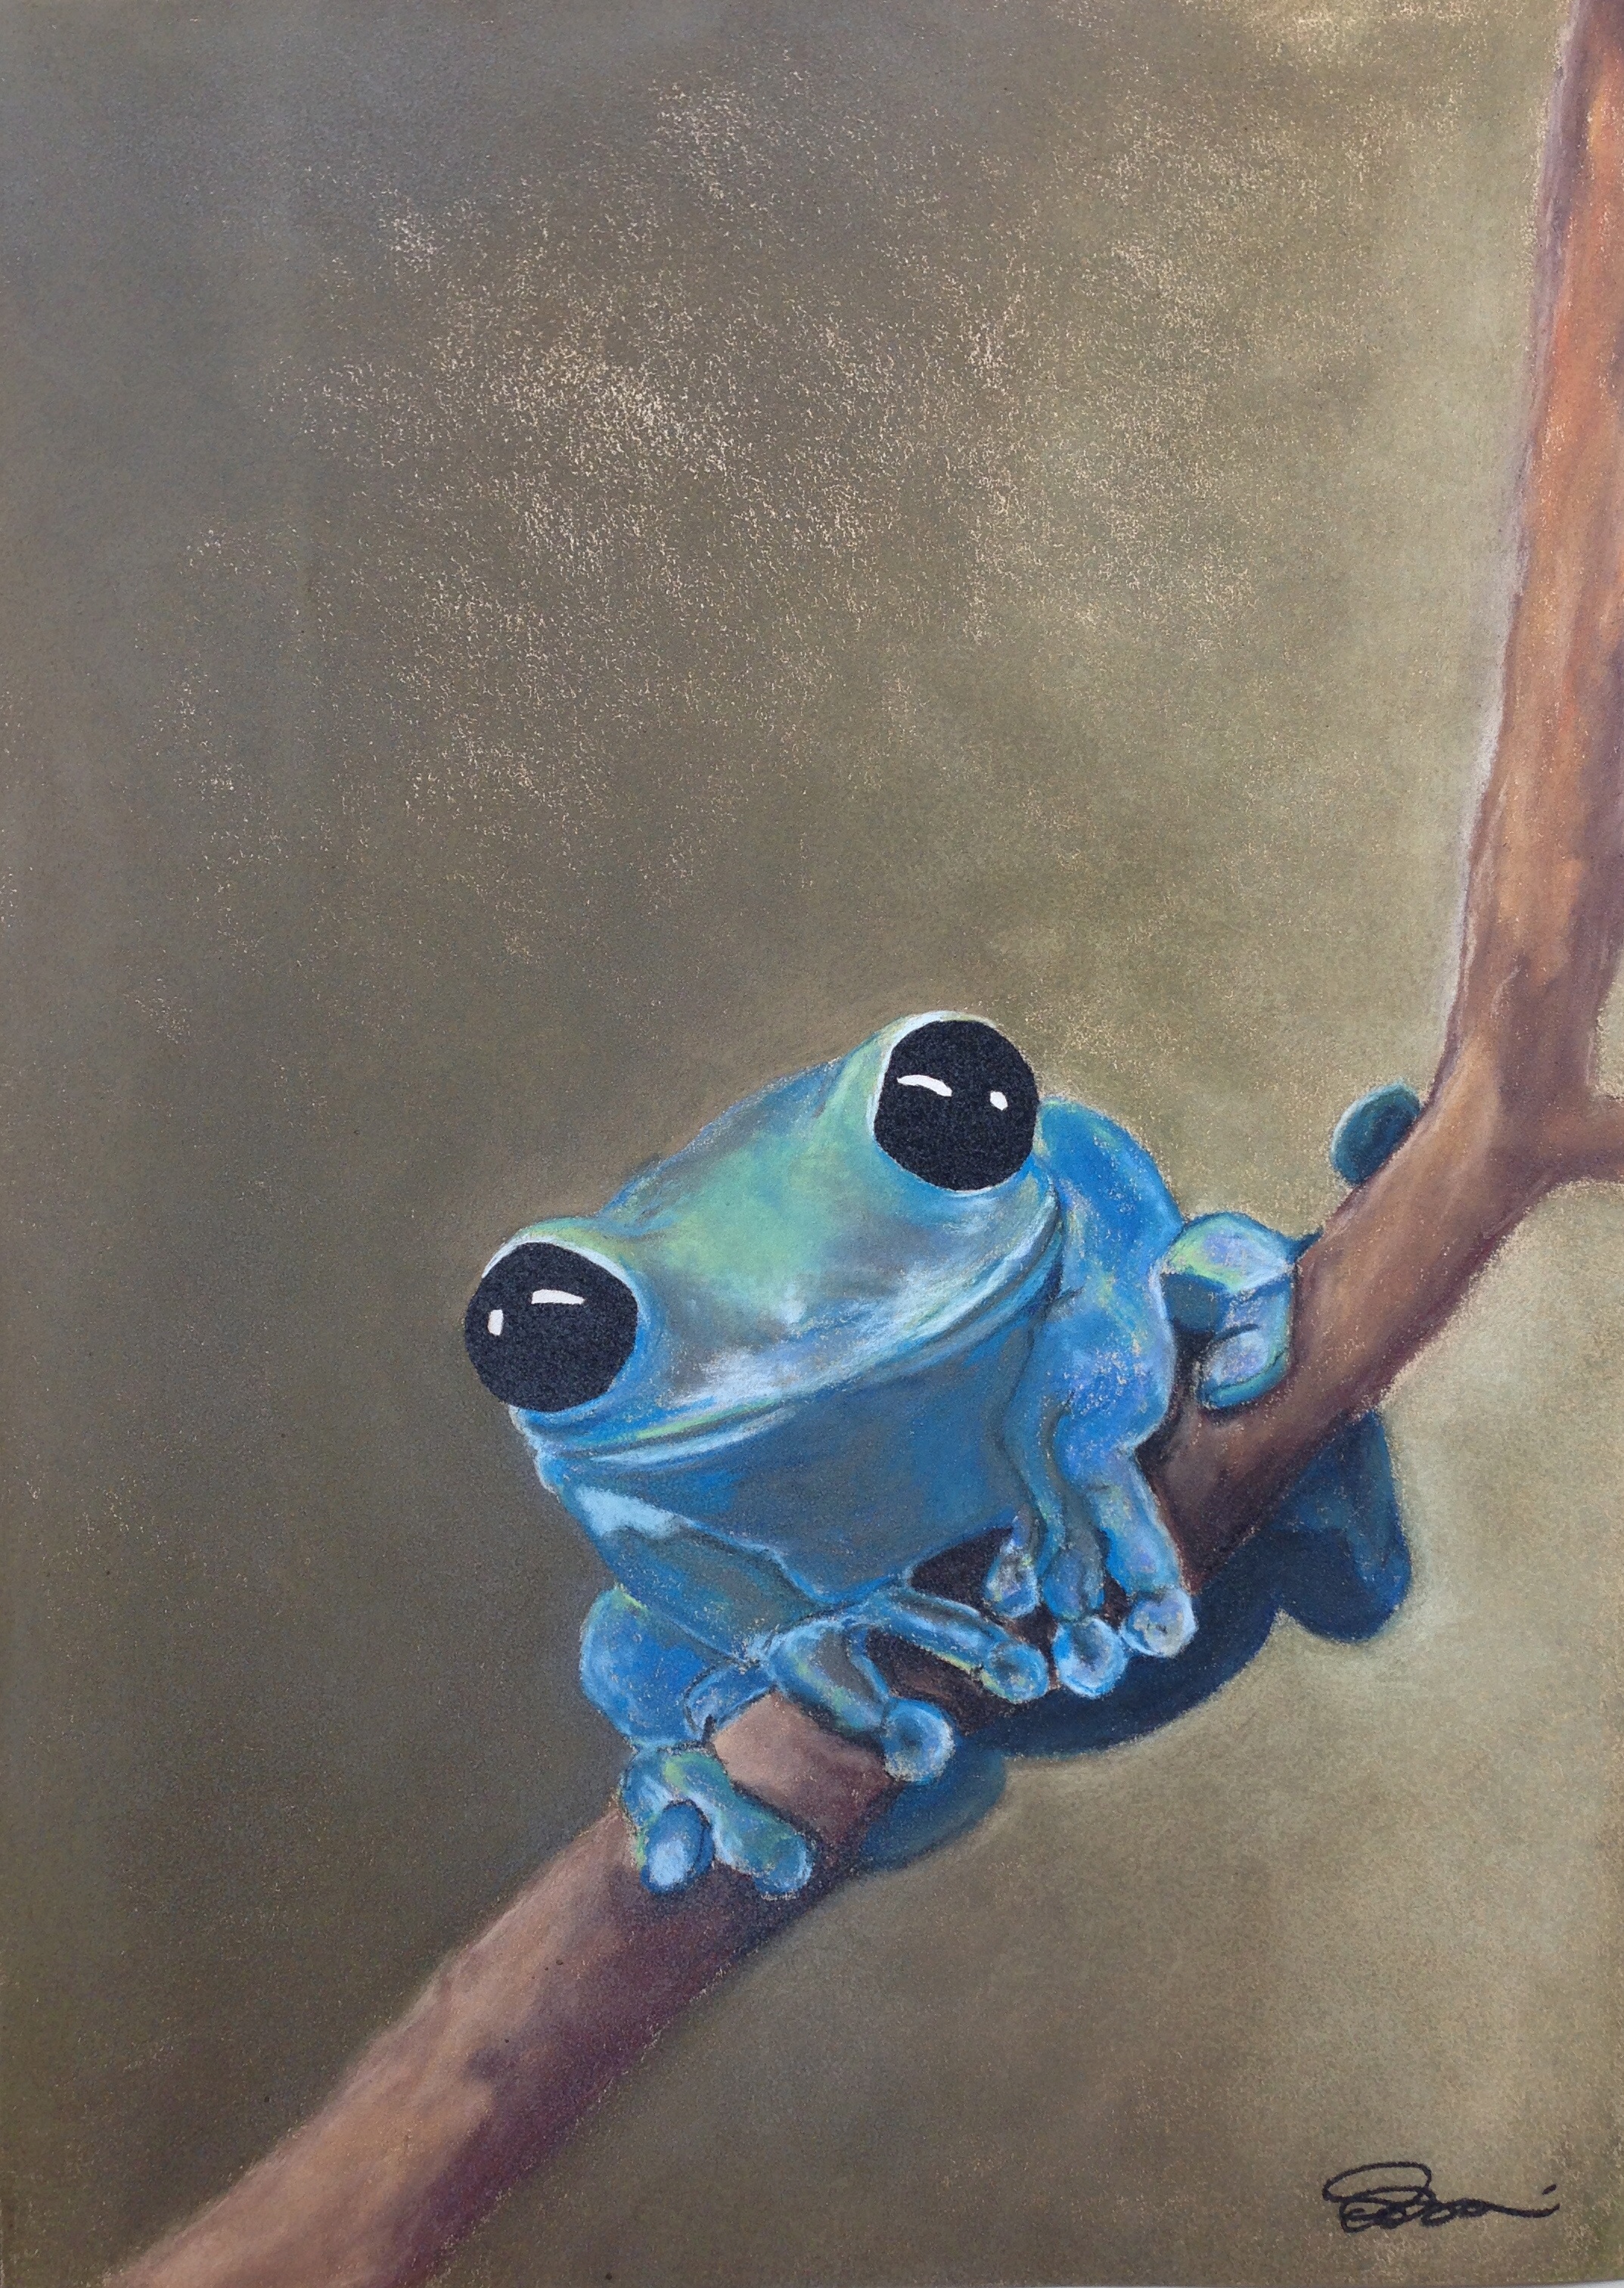 Baby Black Eyed Tree Frog